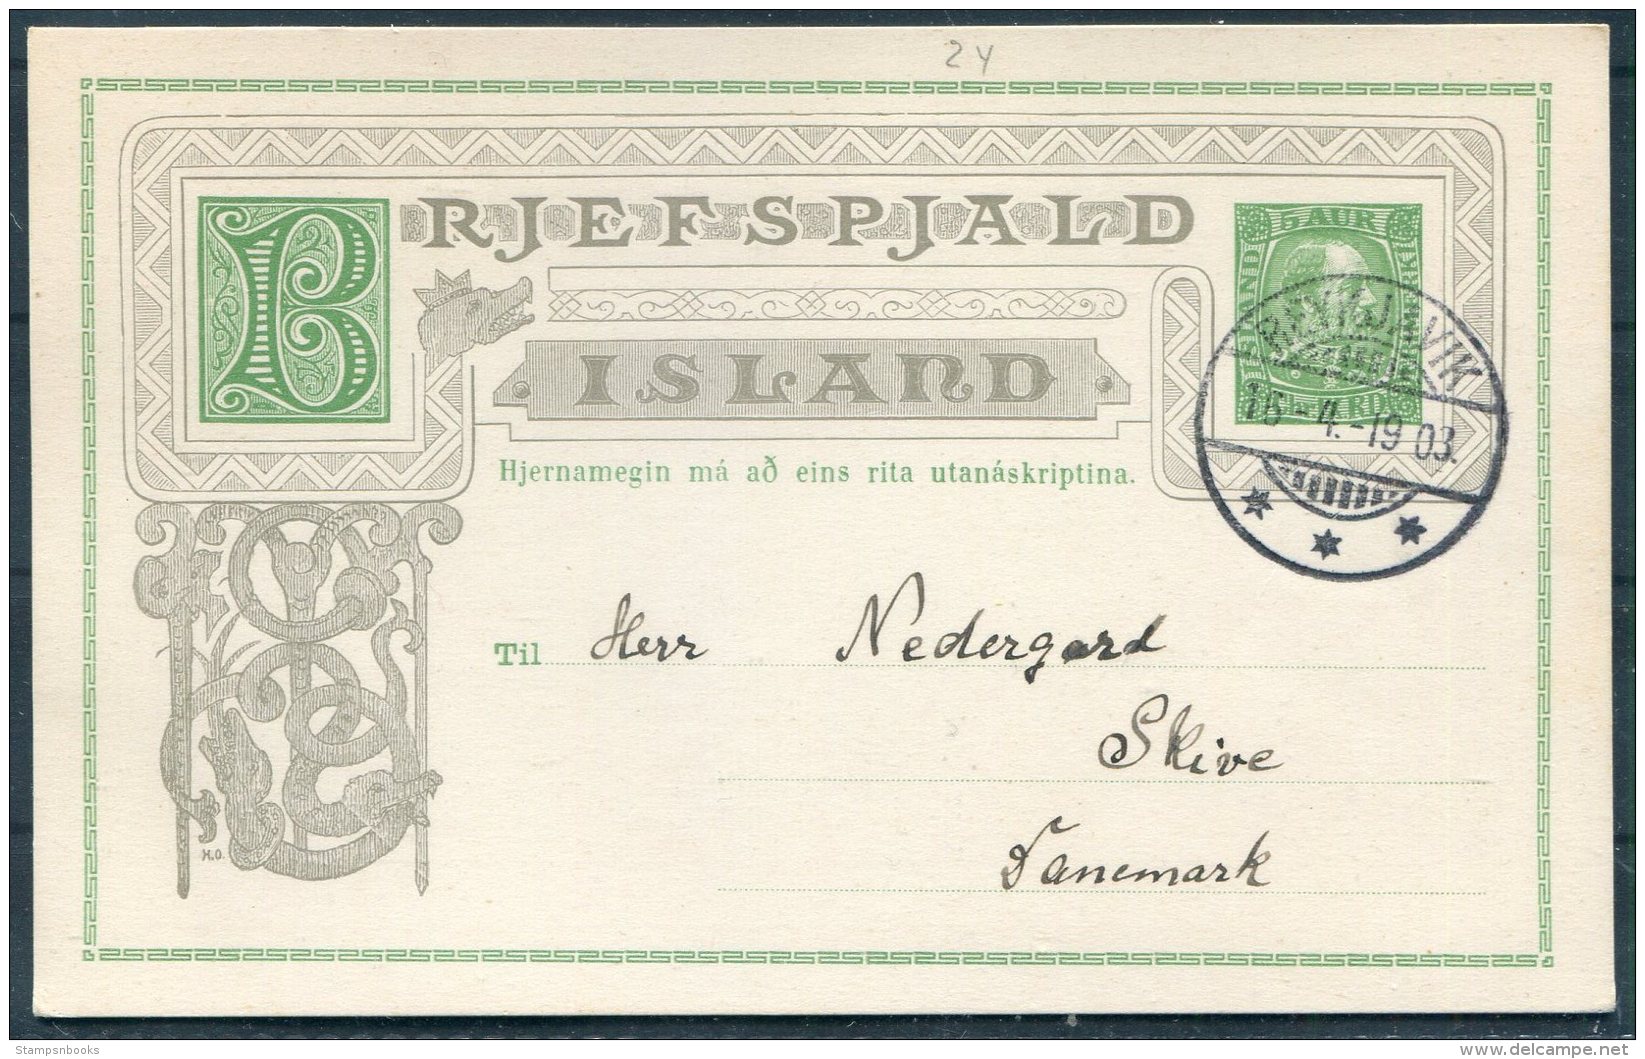 1903 Iceland 5 Aur Chistian 9th Stationery Postcard, Brjefspjald. Reykjavik - Denmark - Covers & Documents